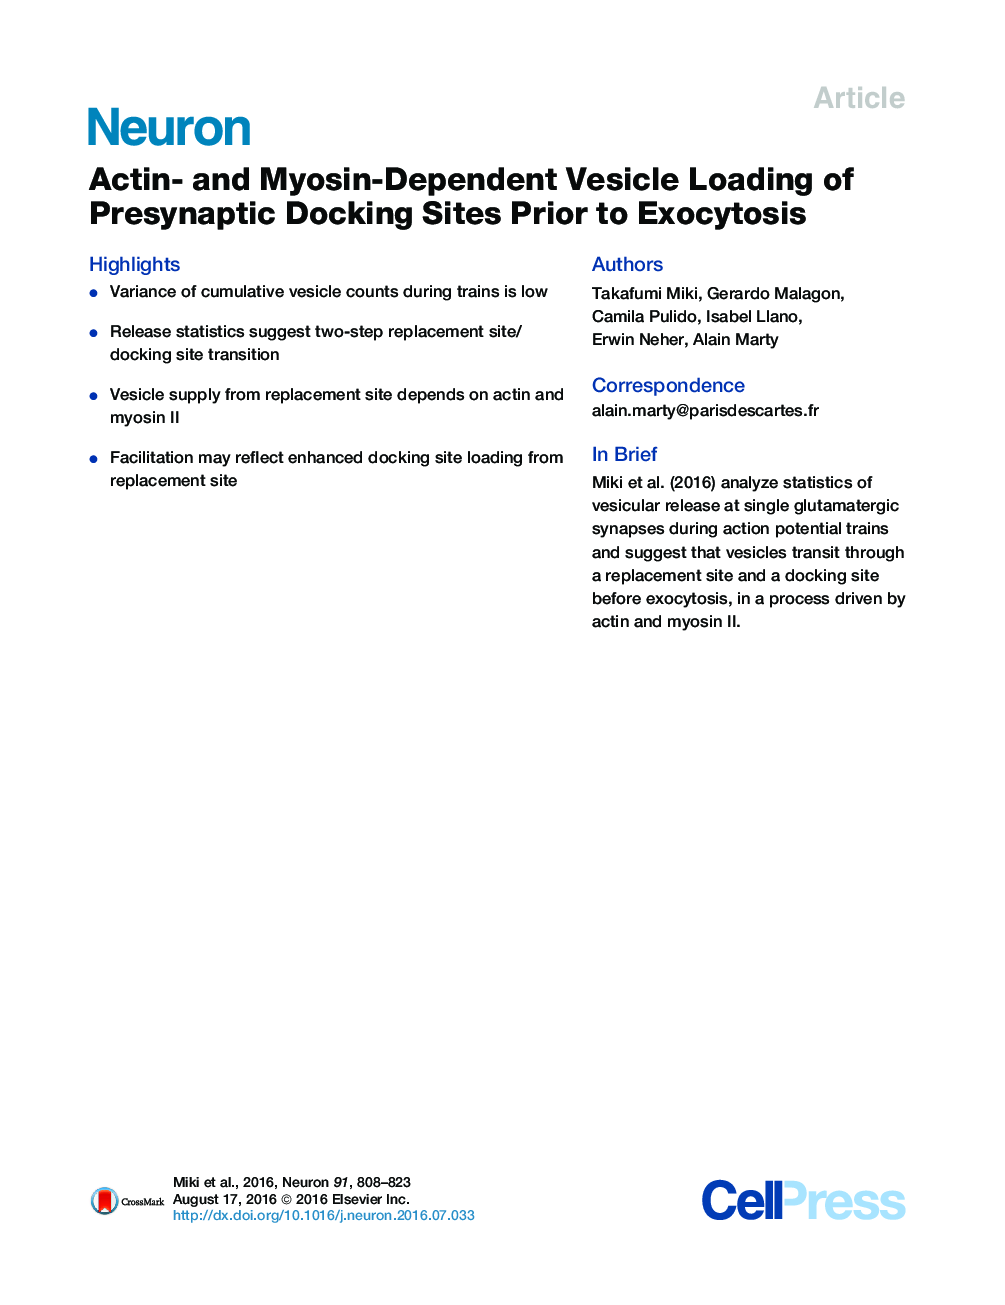 Actin- and Myosin-Dependent Vesicle Loading of Presynaptic Docking Sites Prior to Exocytosis